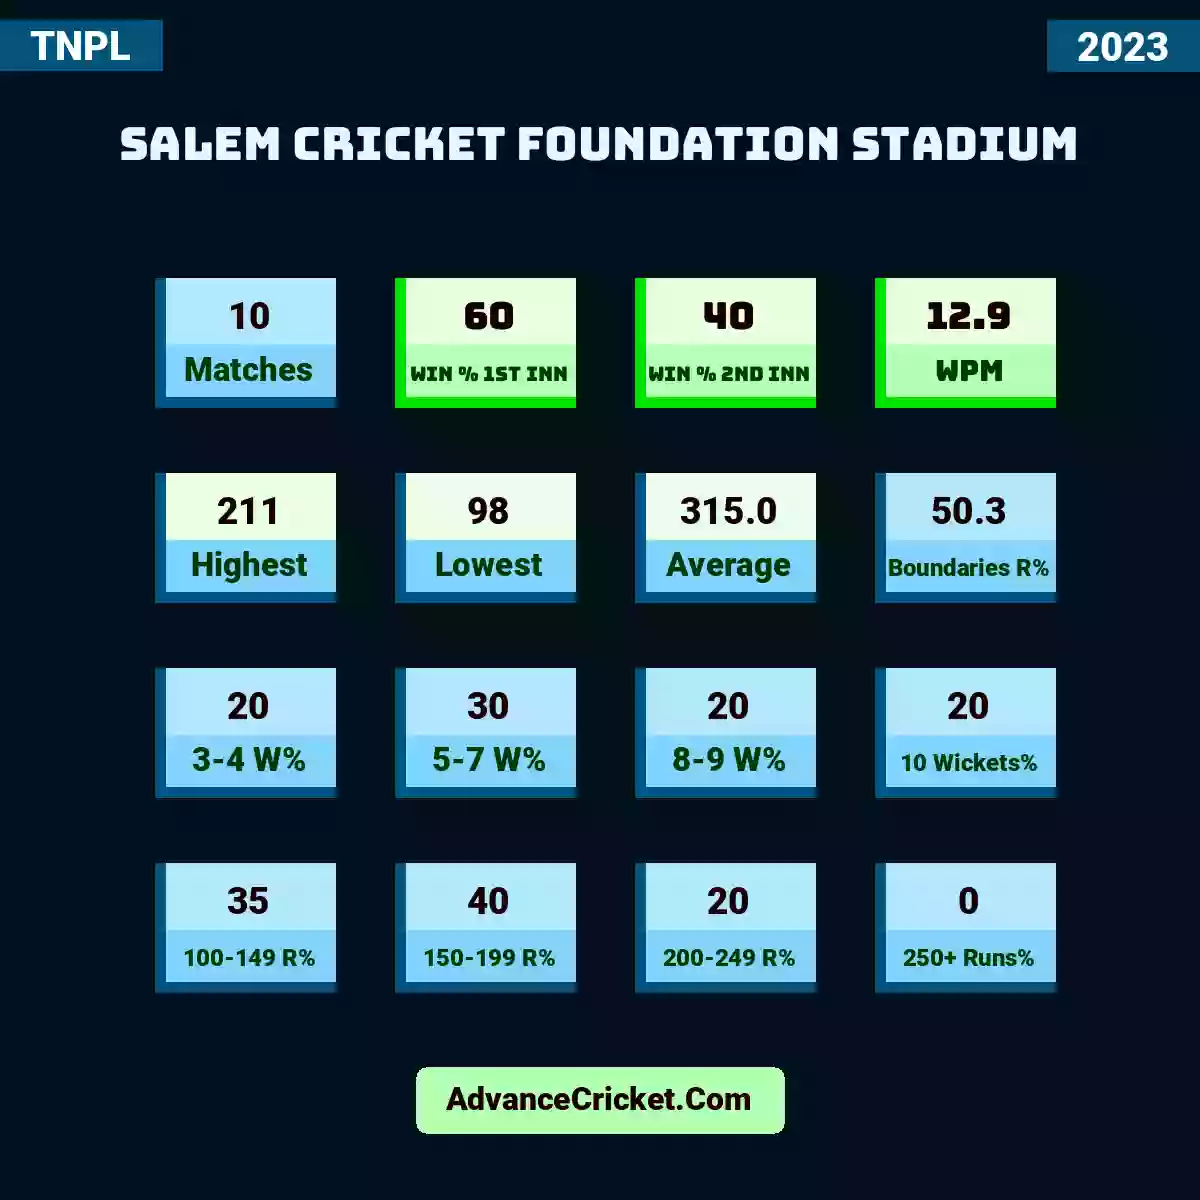 Image showing Salem Cricket Foundation Stadium with Matches: 10, Win % 1st Inn: 60, Win % 2nd Inn: 40, WPM: 12.9, Highest: 211, Lowest: 98, Average: 315.0, Boundaries R%: 50.3, 3-4 W%: 20, 5-7 W%: 30, 8-9 W%: 20, 10 Wickets%: 20, 100-149 R%: 35, 150-199 R%: 40, 200-249 R%: 20, 250+ Runs%: 0.